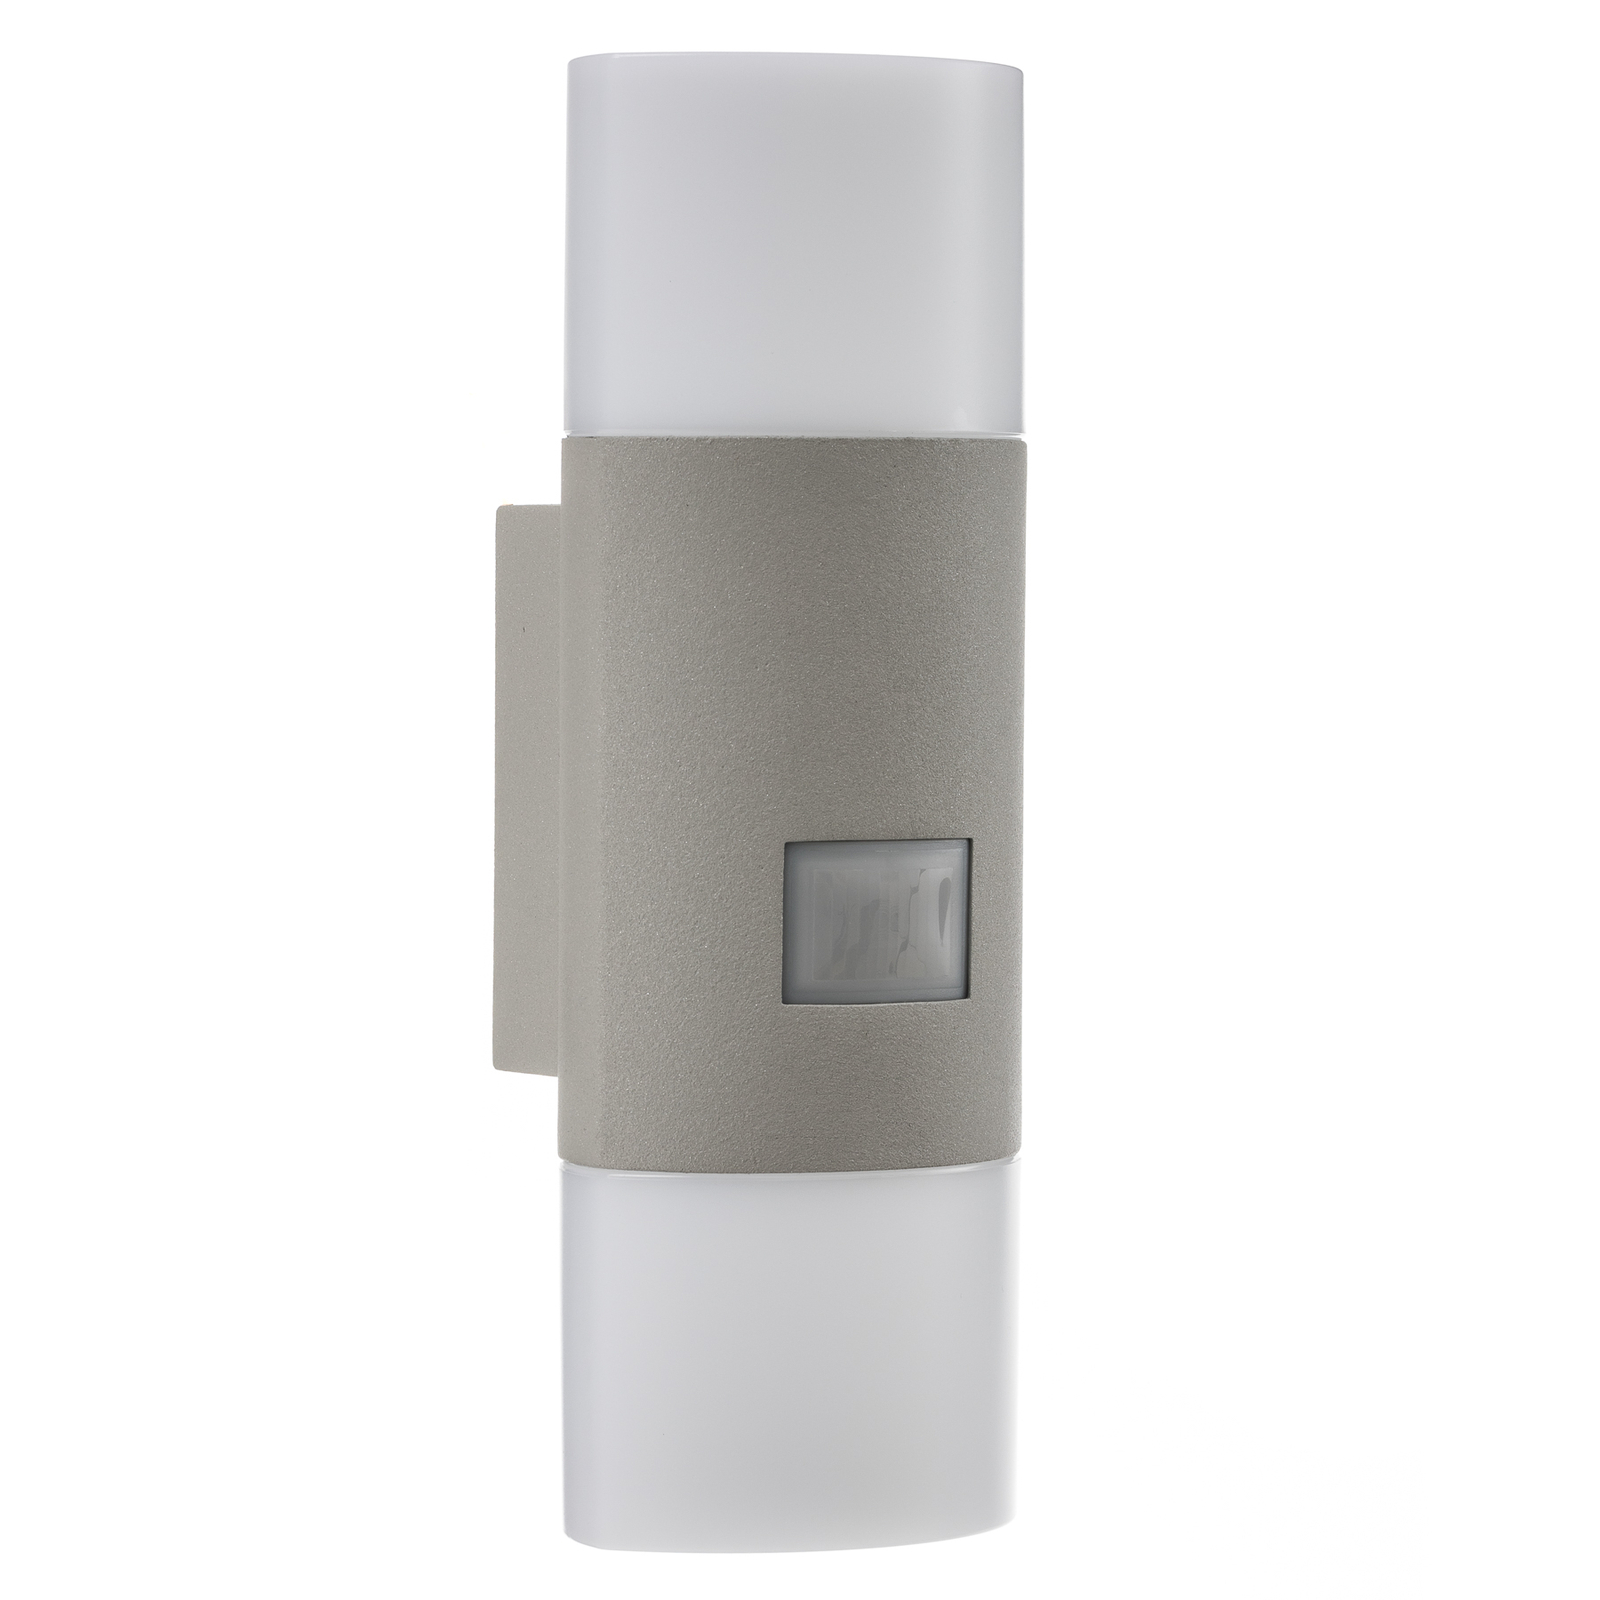 STEINEL L 910 S sensor outdoor wall light, silver